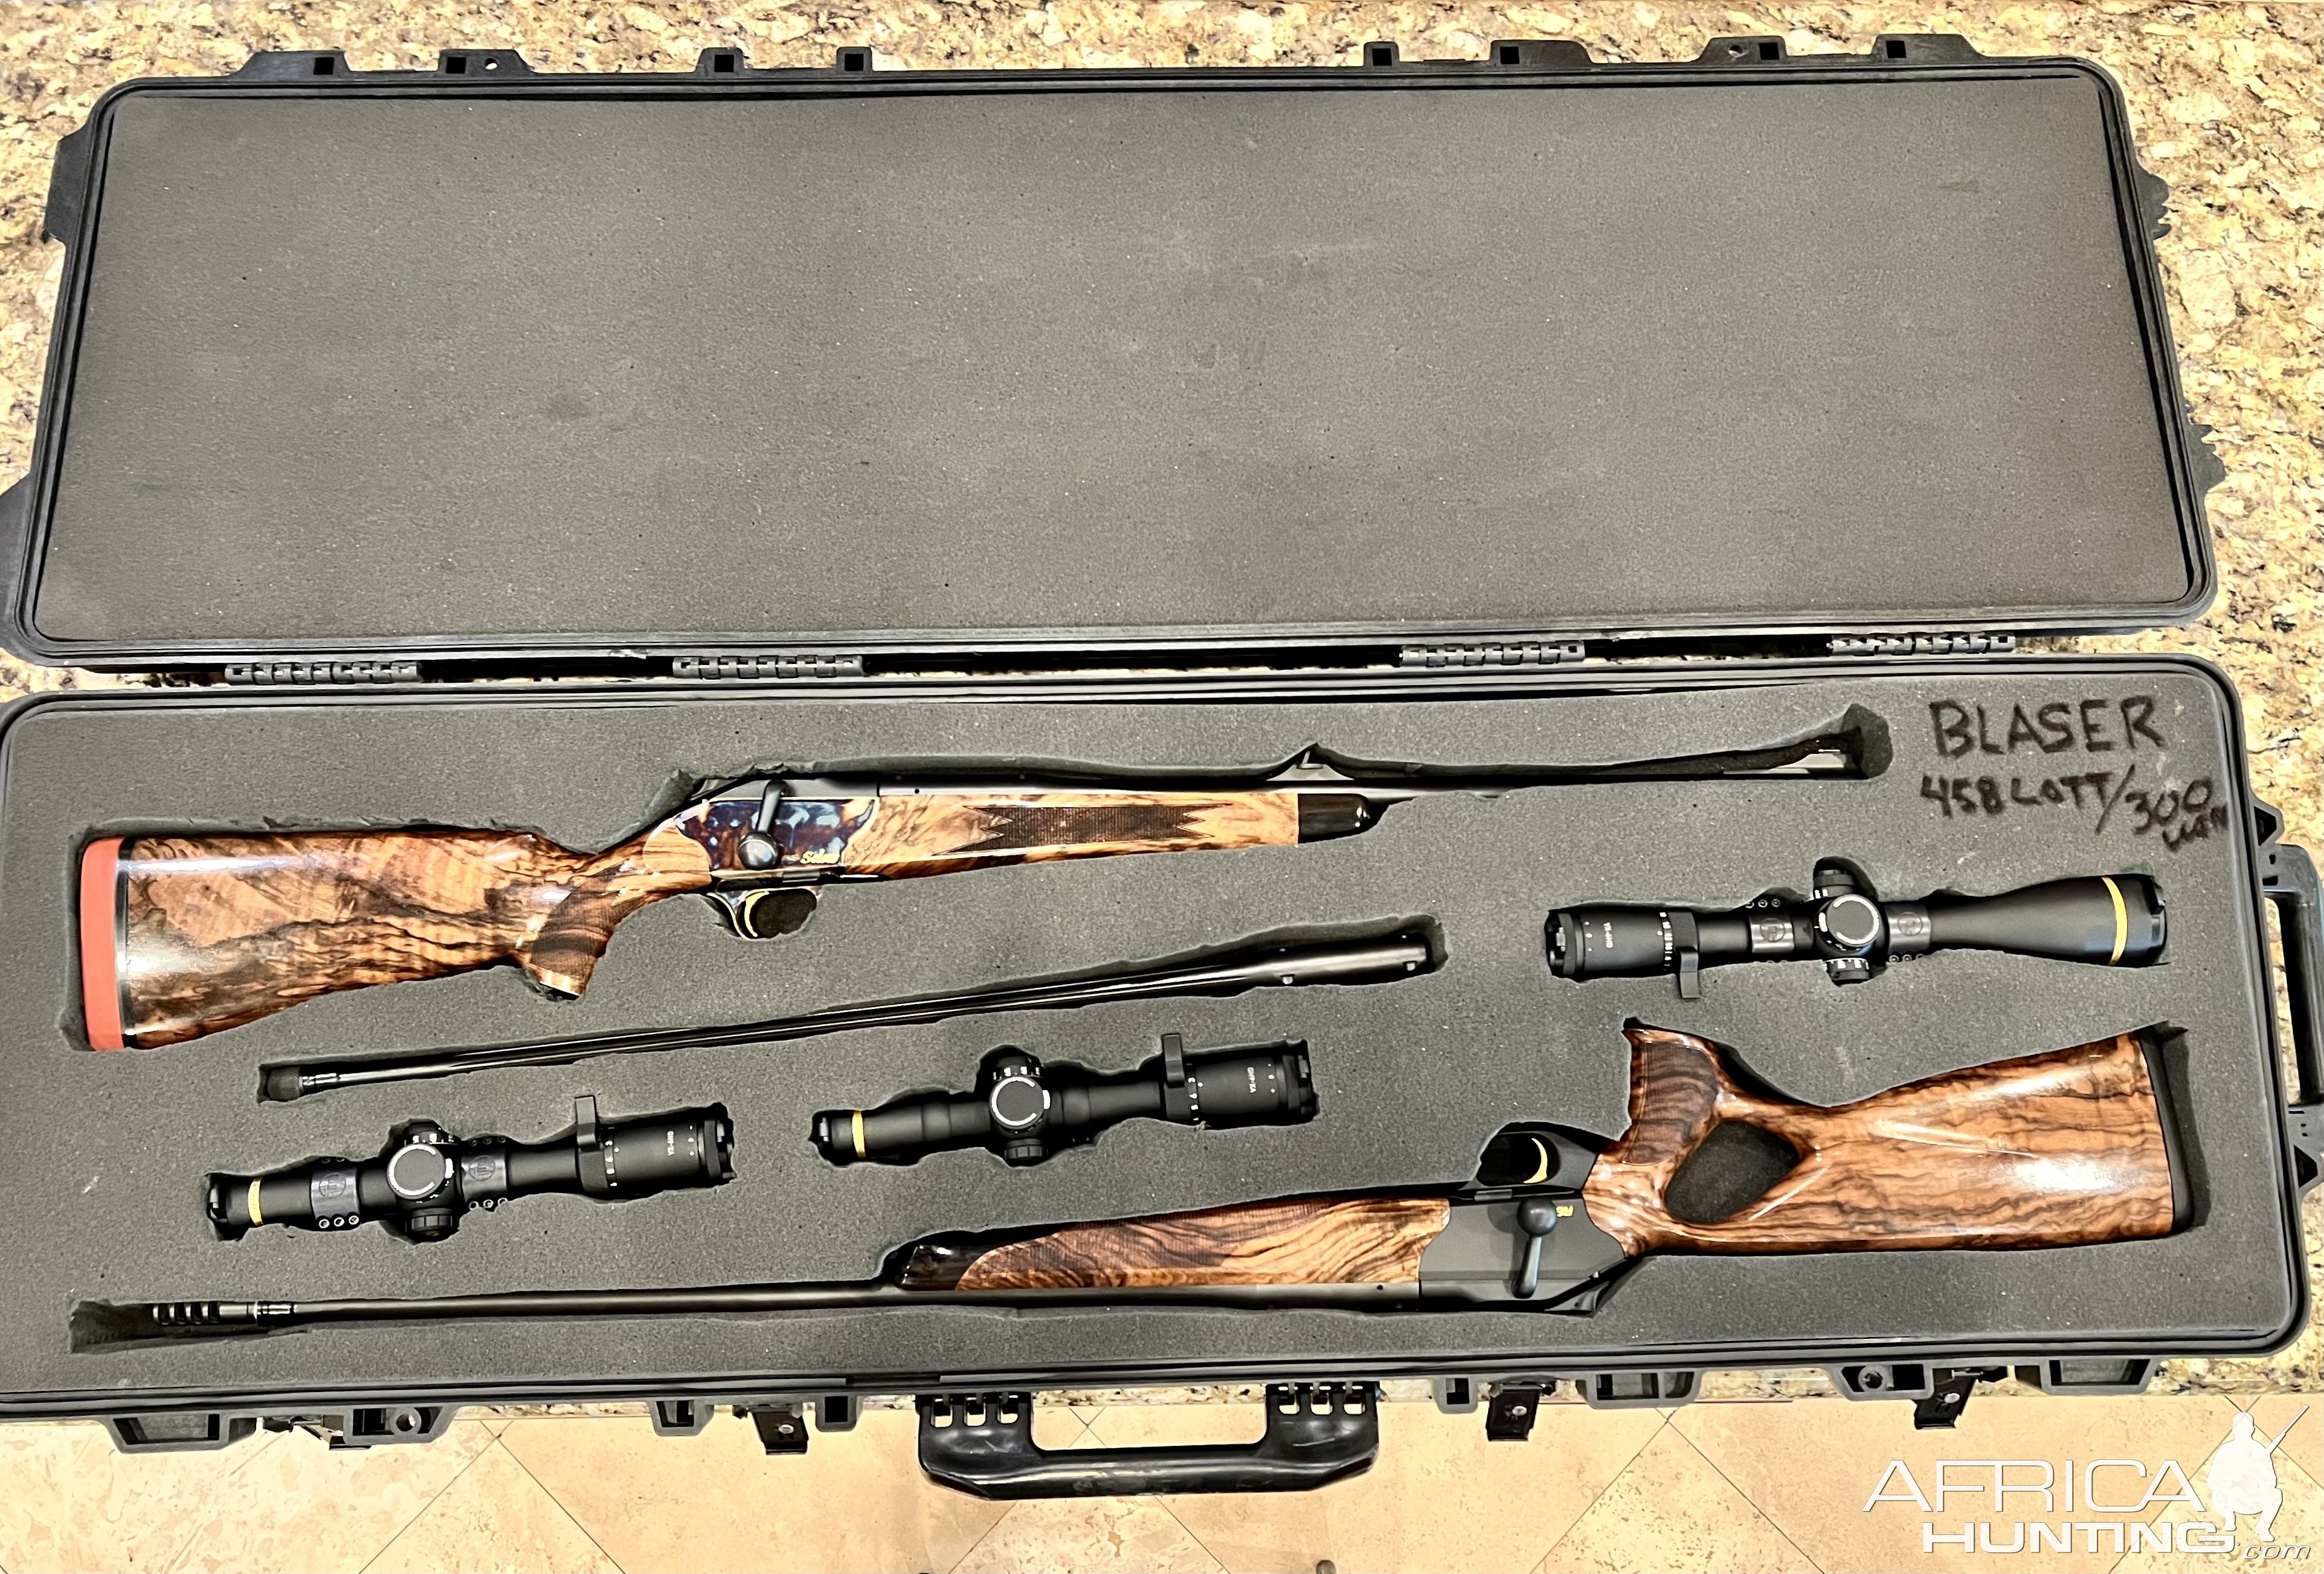 2 Blaser Rifles With 3 Barrels & 3 Scopes Case Configuration